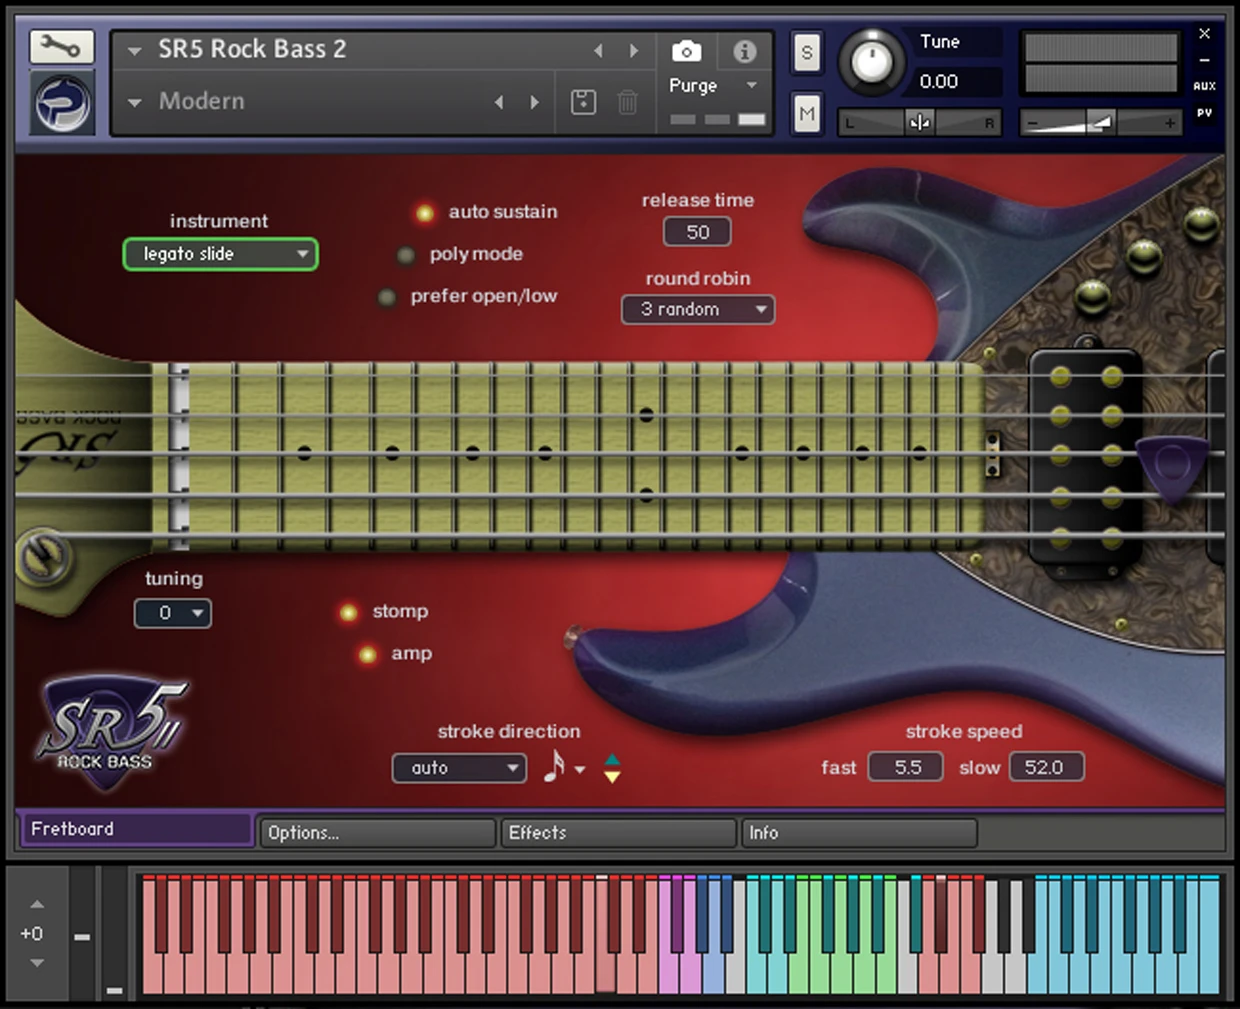 SR5 Rock Bass 2 Main GUI